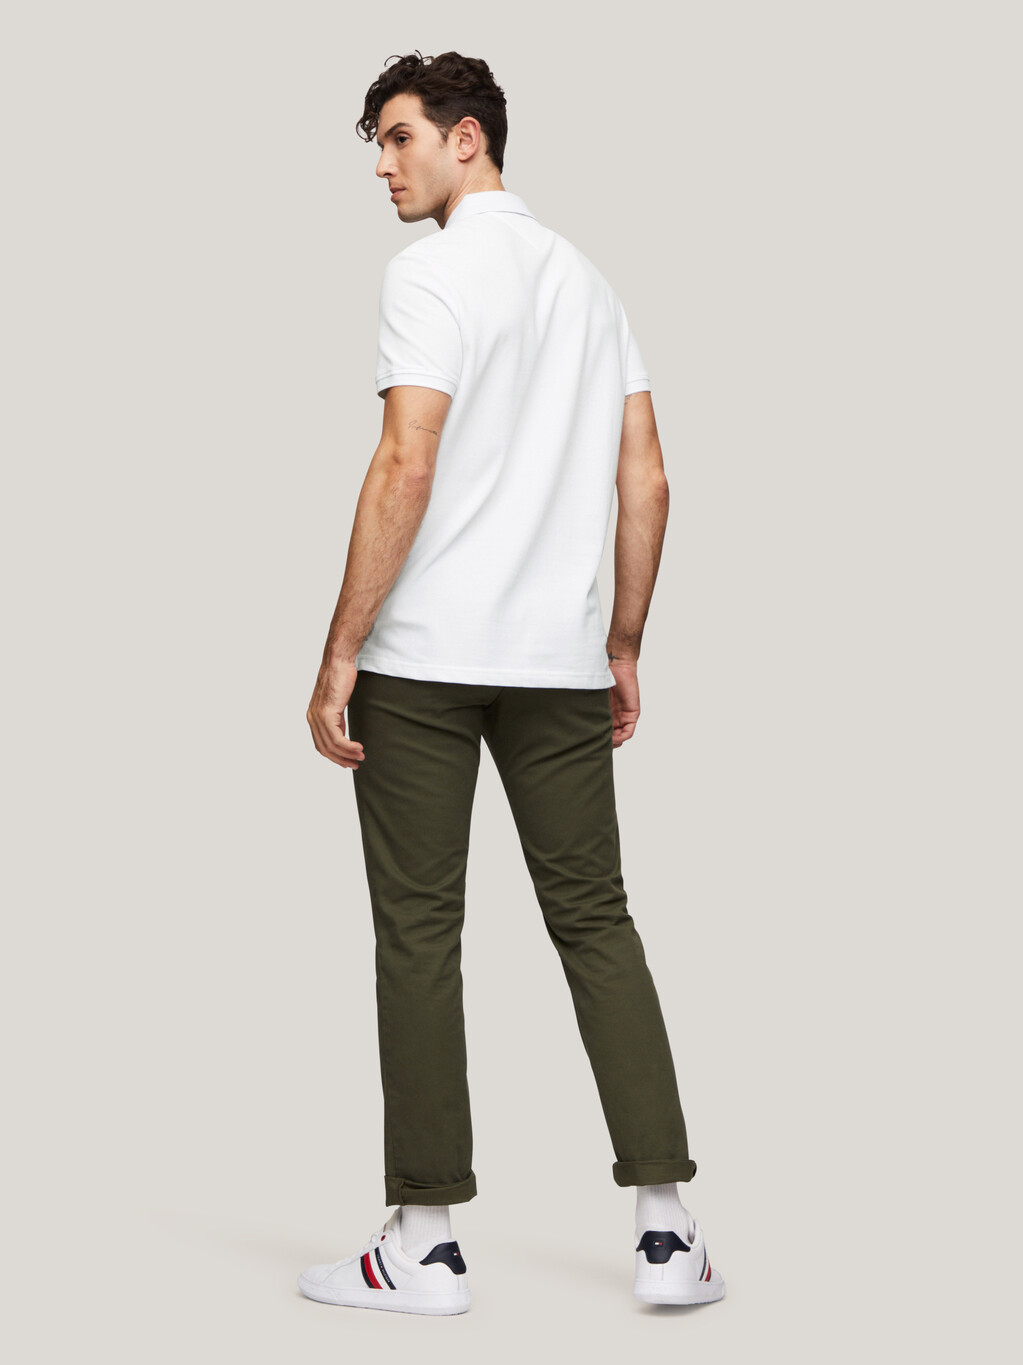 Hilfiger Monotype Tiped 常規版型 Polo 衫, White, hi-res